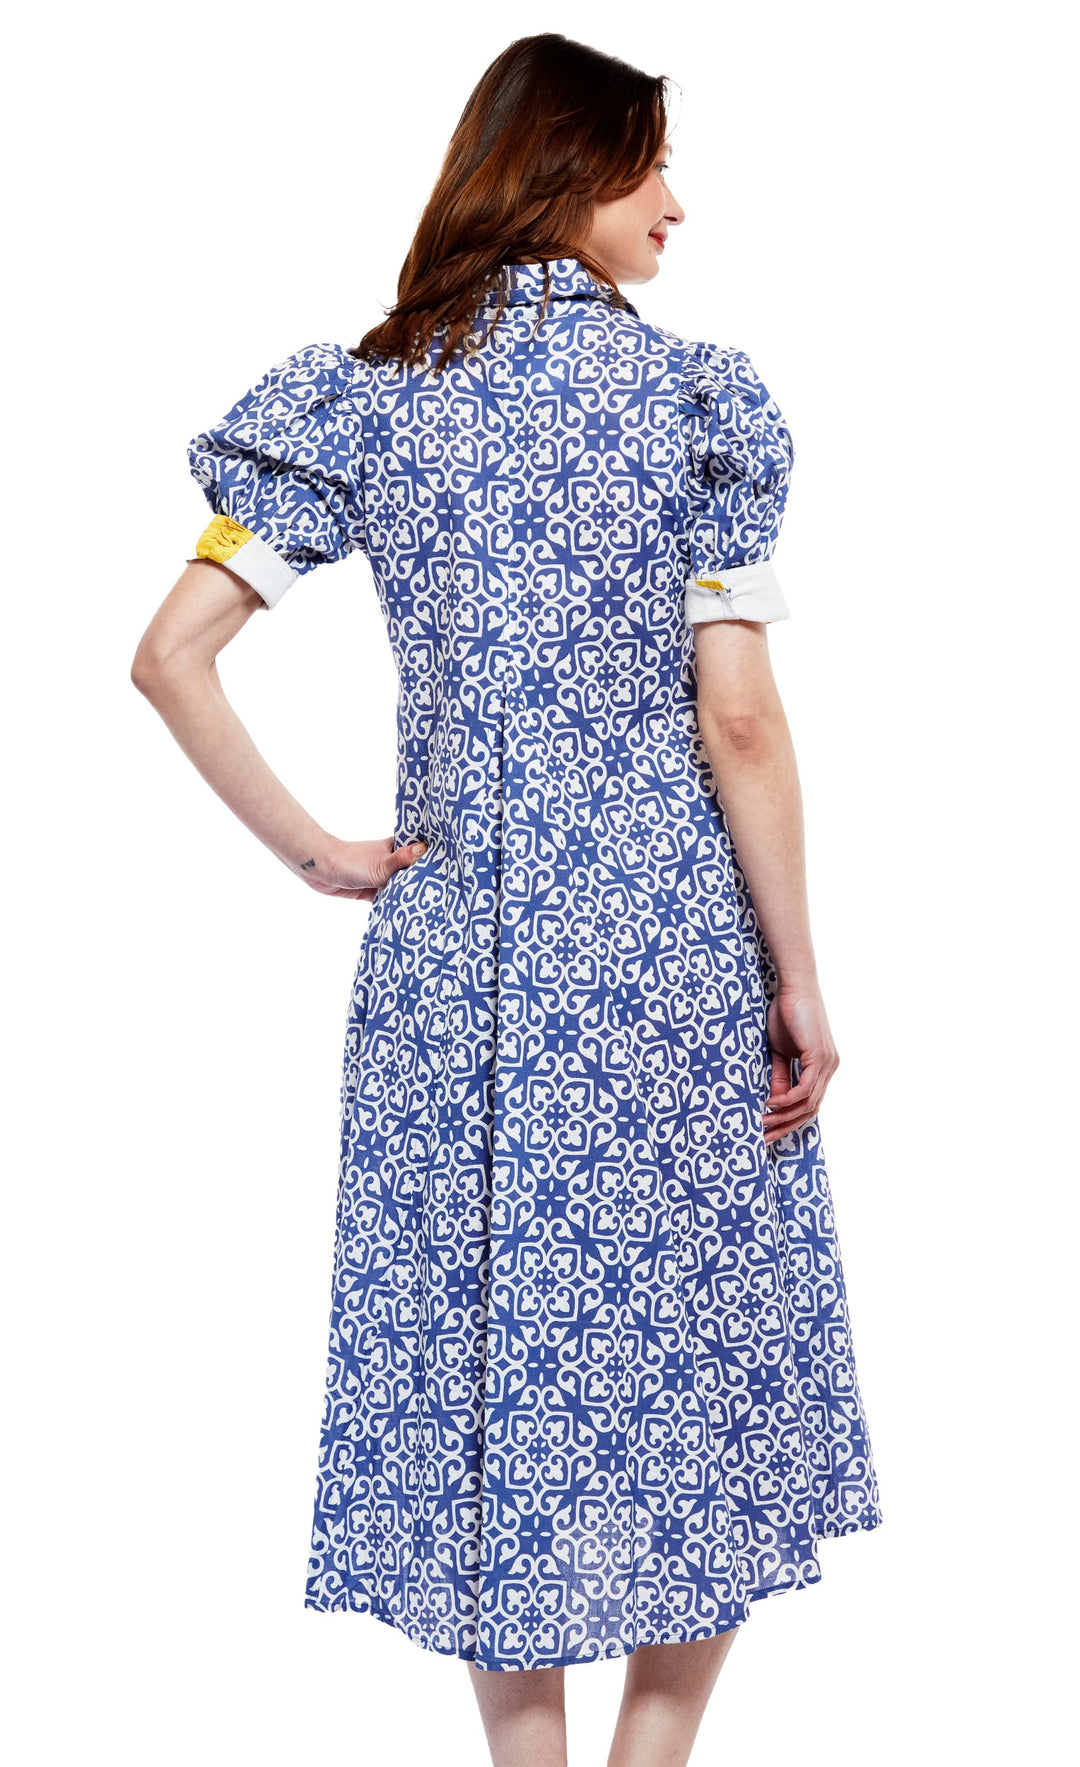 Montauk Dress in Blue with White Geometric Pattern XS / 6657-M600